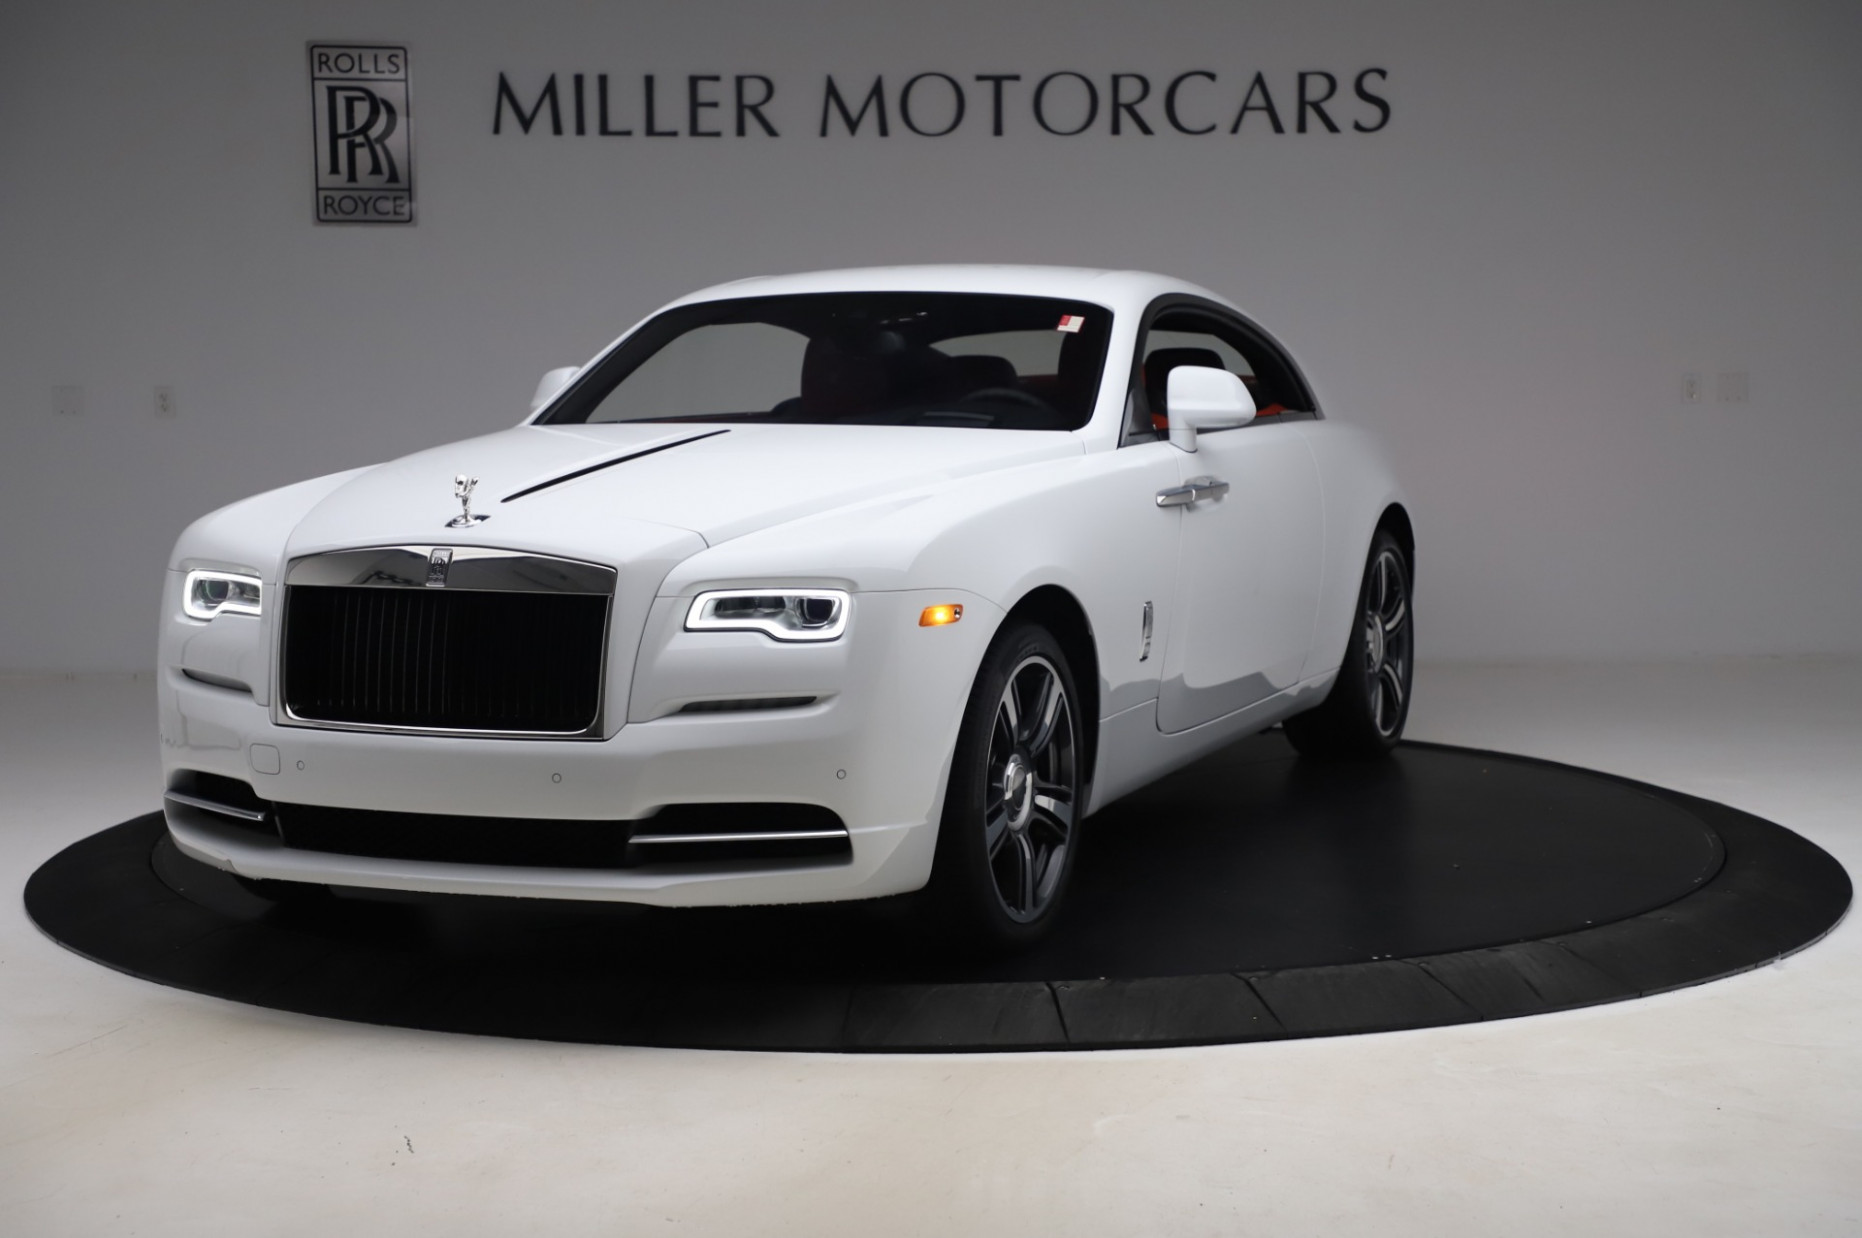 New 4 Rolls Royce Wraith For Sale () Miller Motorcars Stock #r4 Used Rolls Royce Wraith For Sale